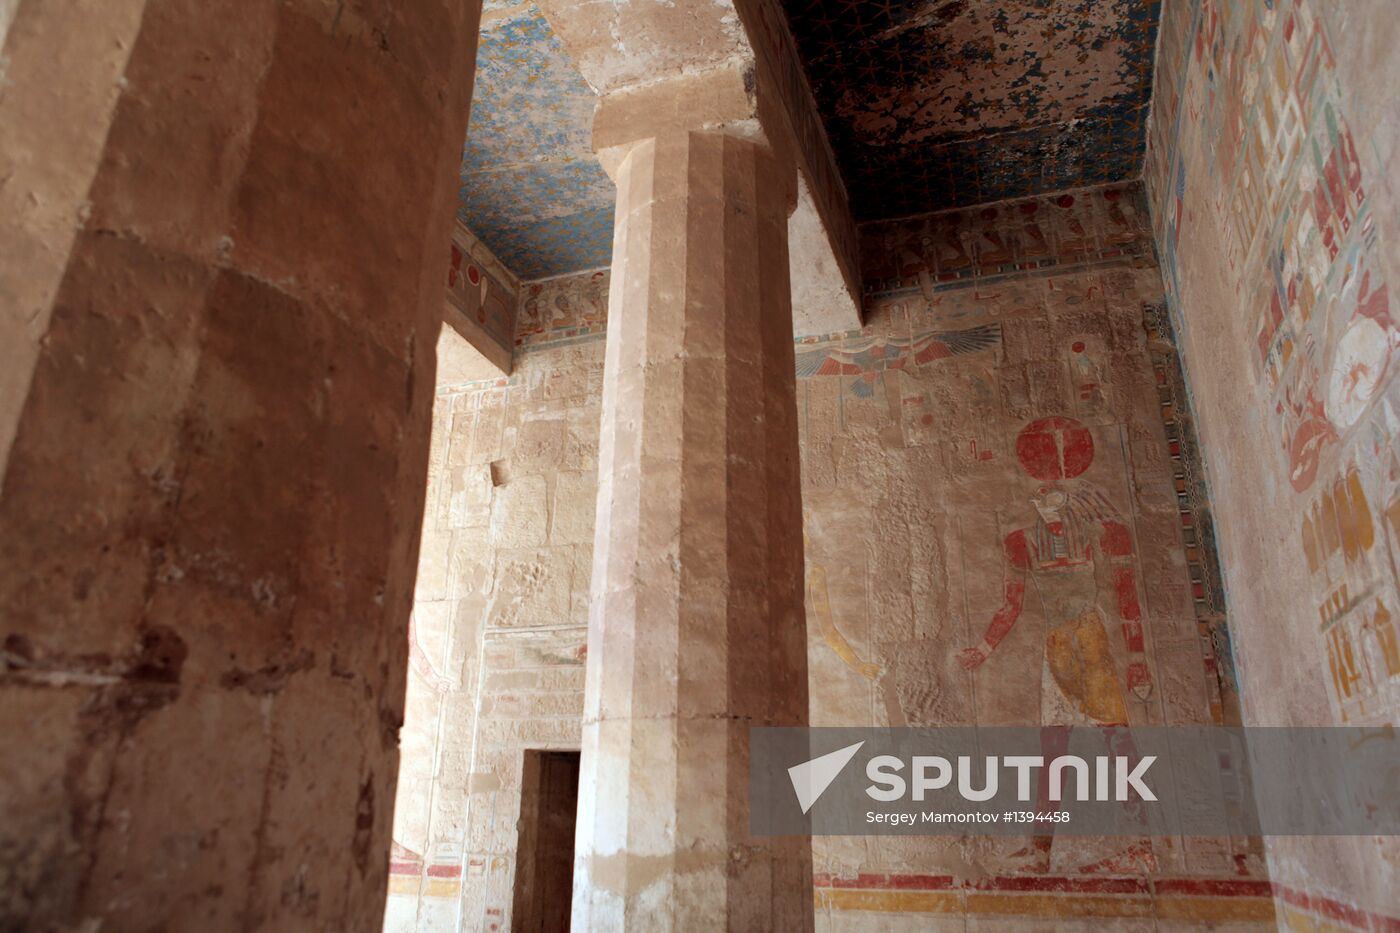 Luxor Temples